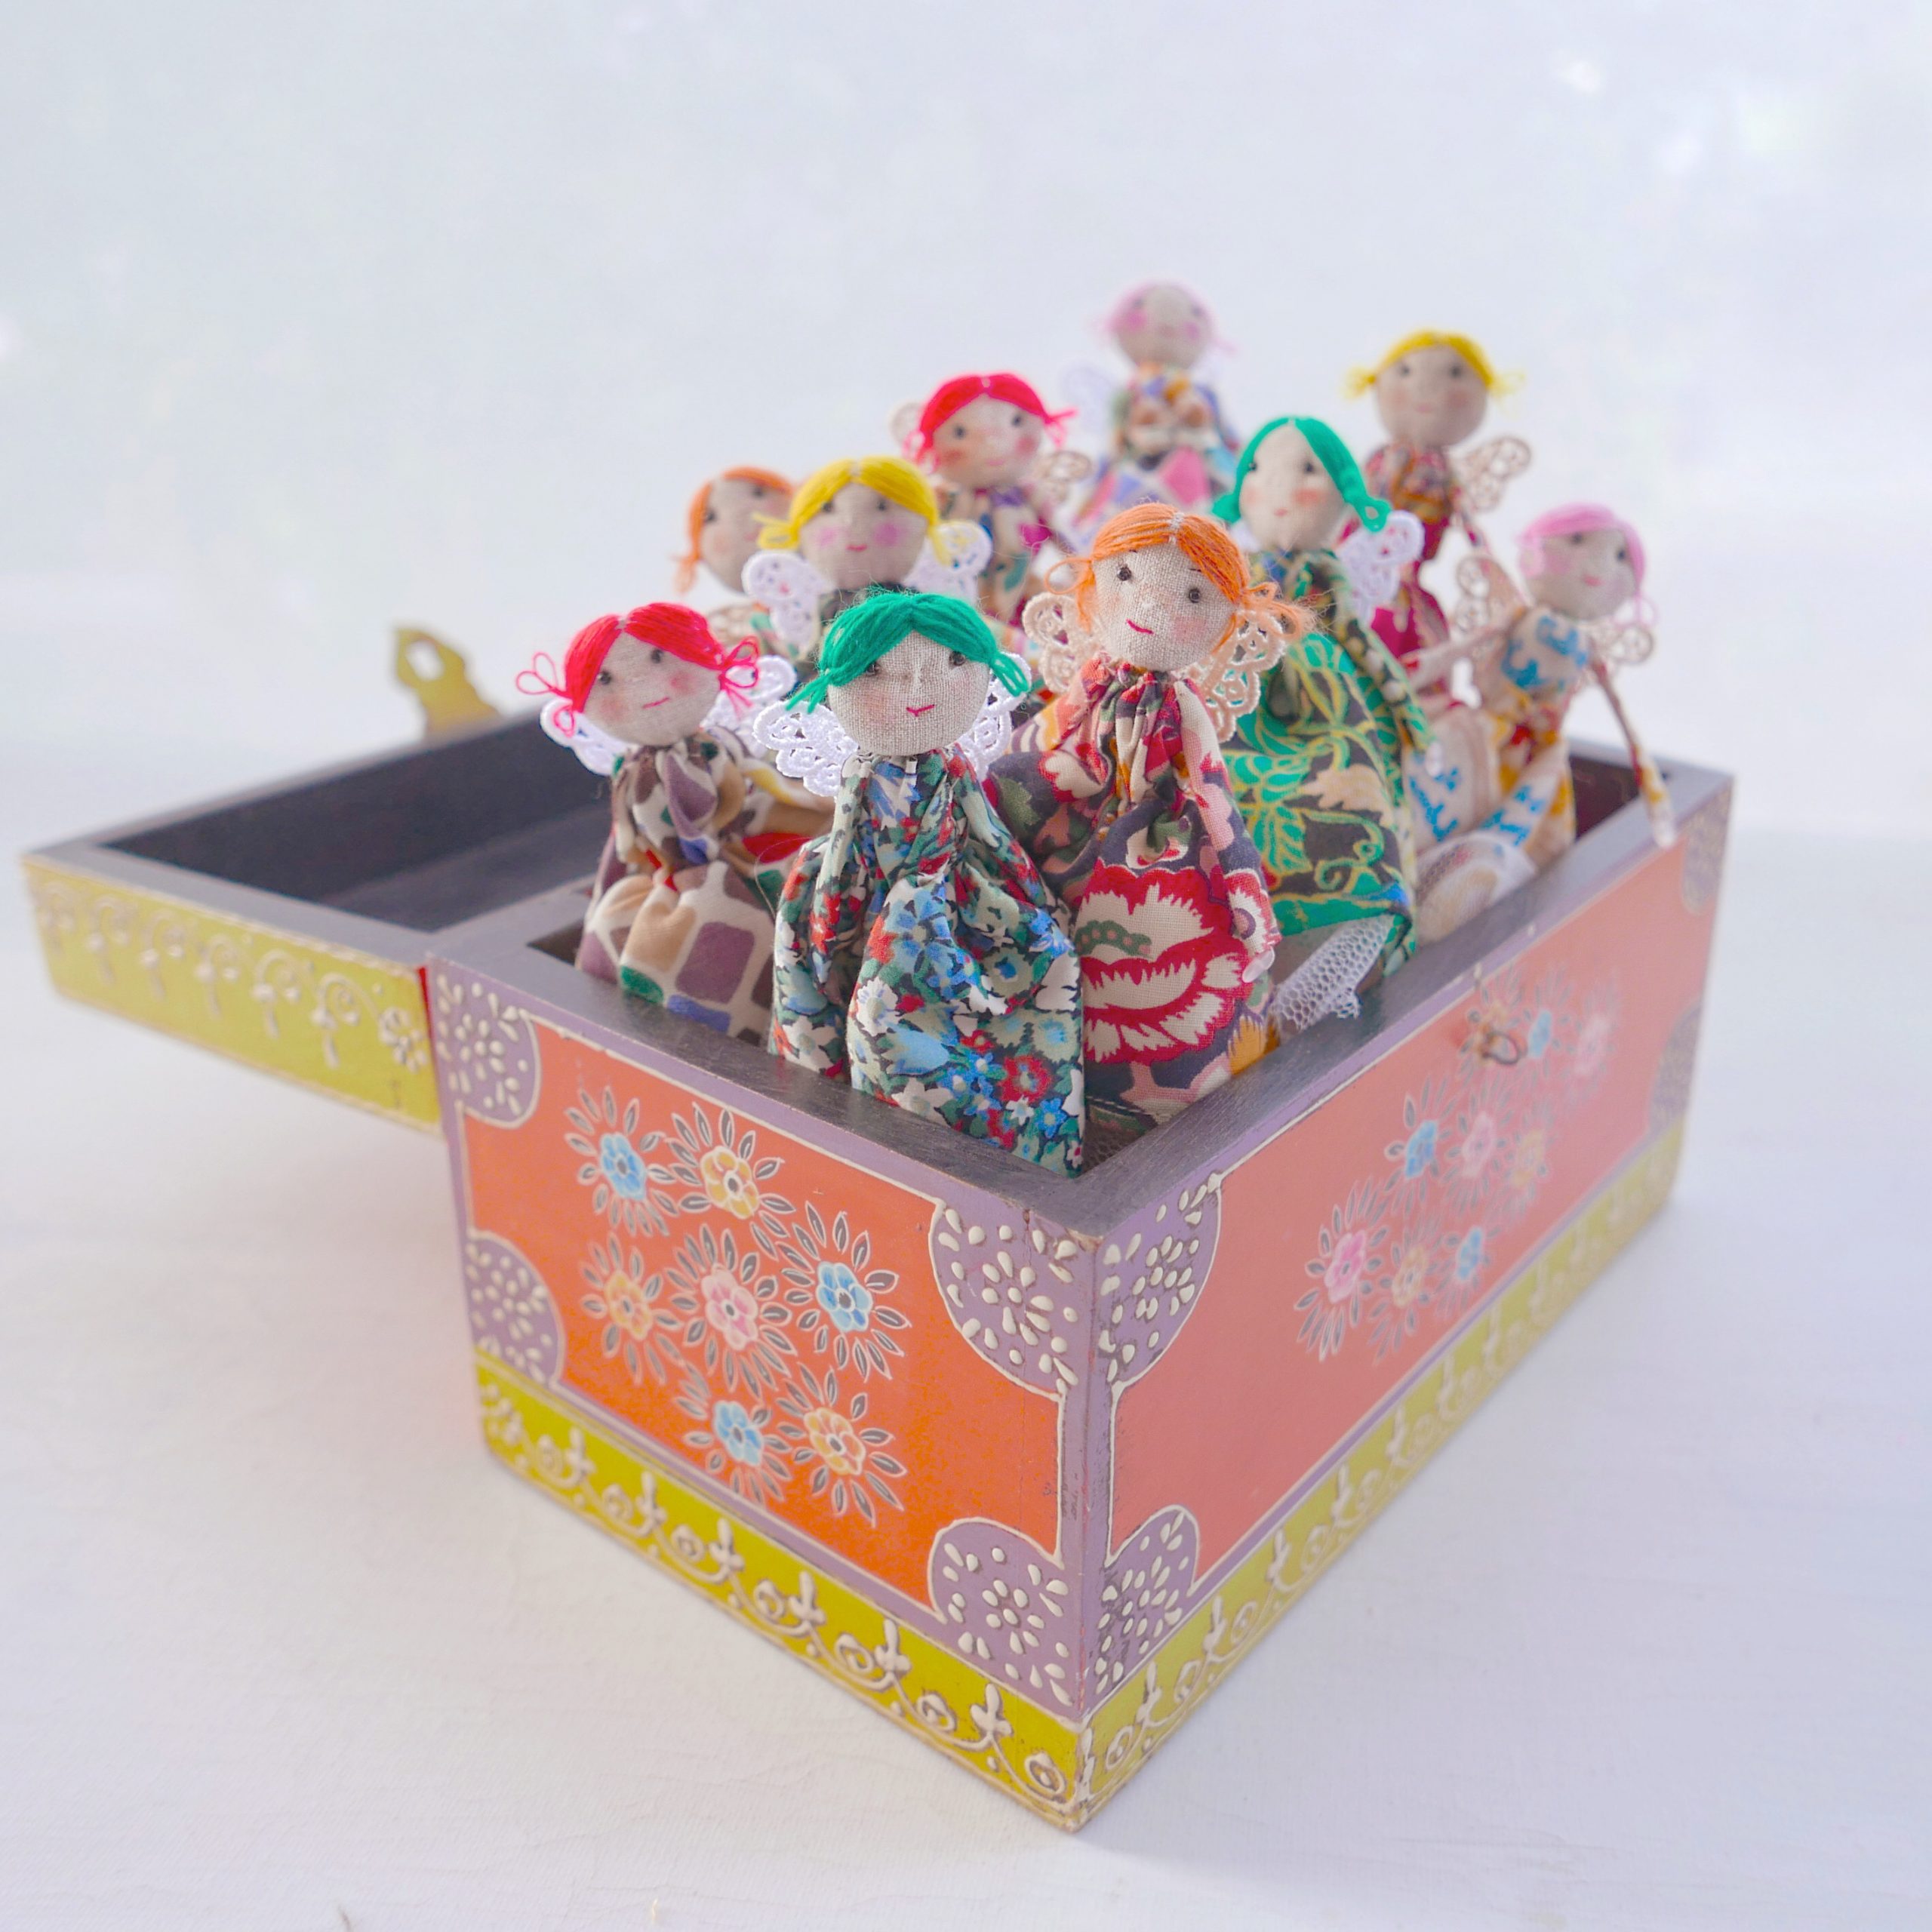 Handmade colourful miniature fairy dolls by modflowers british maker